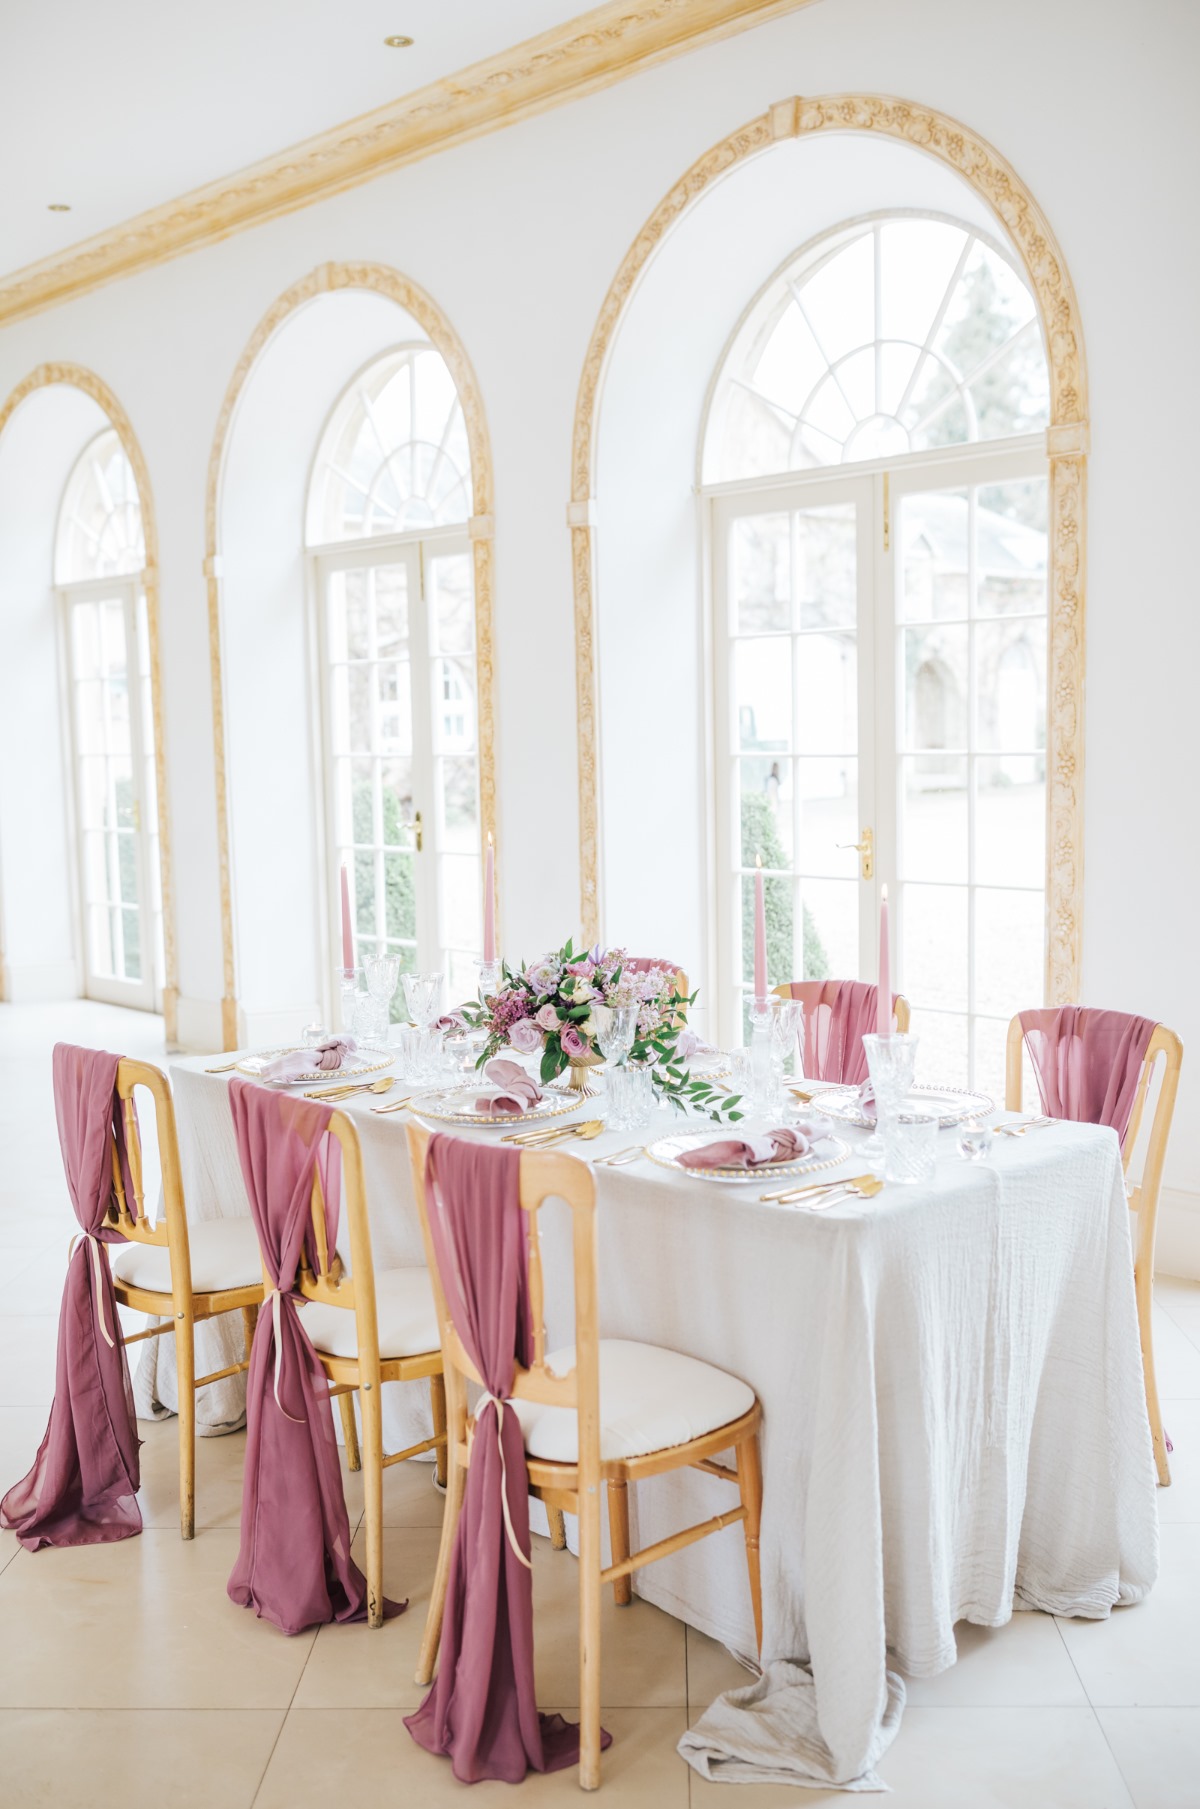 blush and white wedding table decor ideas